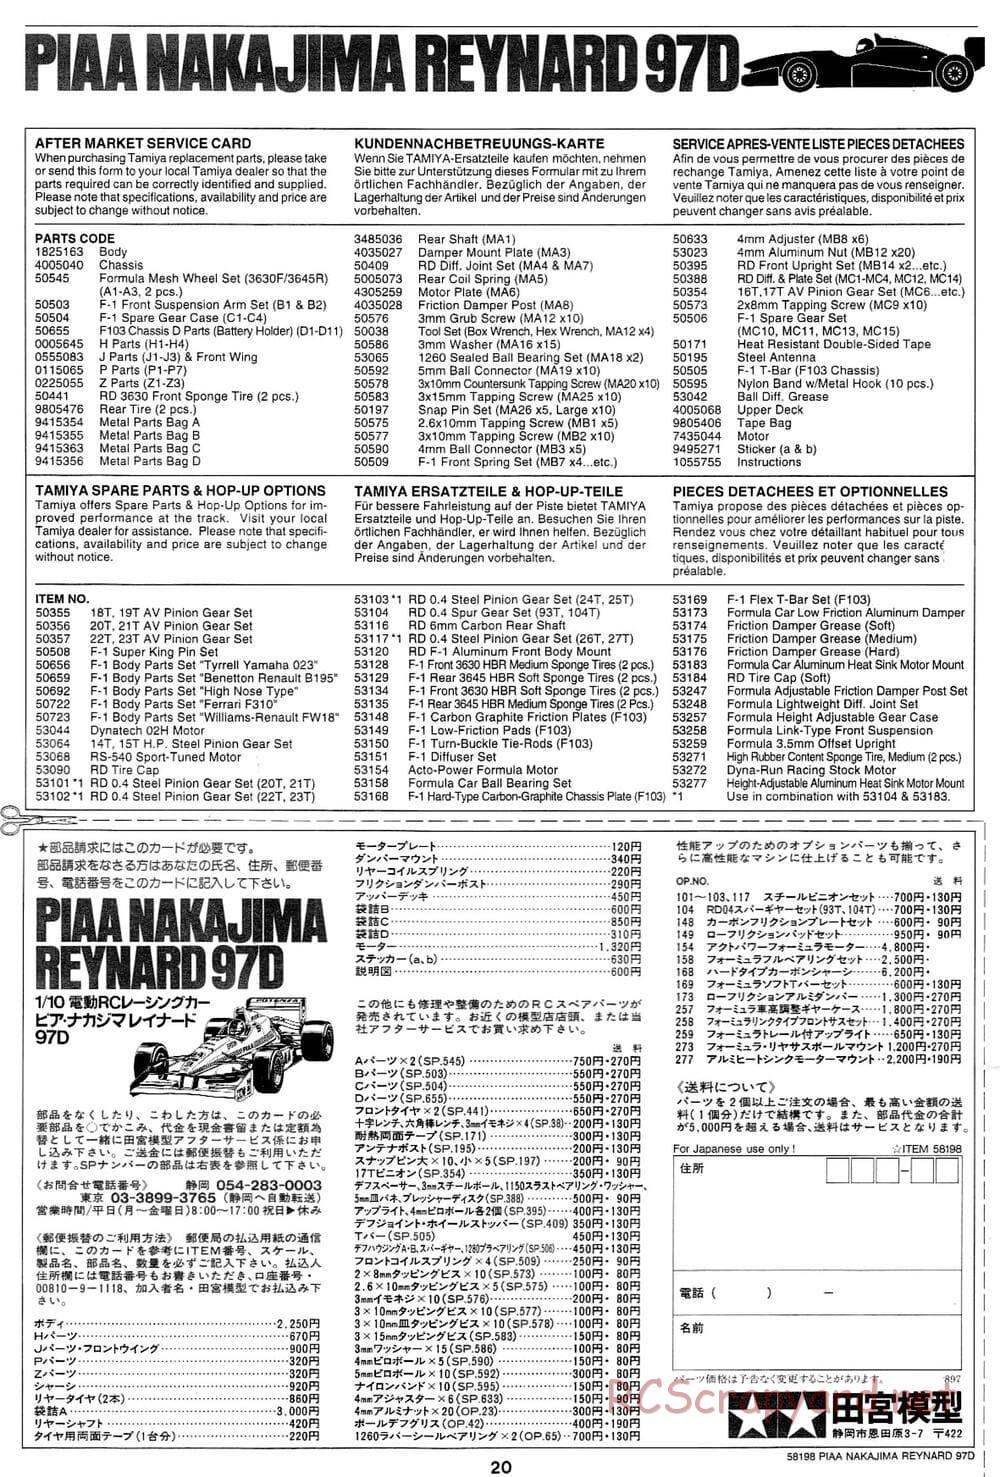 Tamiya - PIAA Nakajima Reynard 97D - F103 Chassis - Manual - Page 20